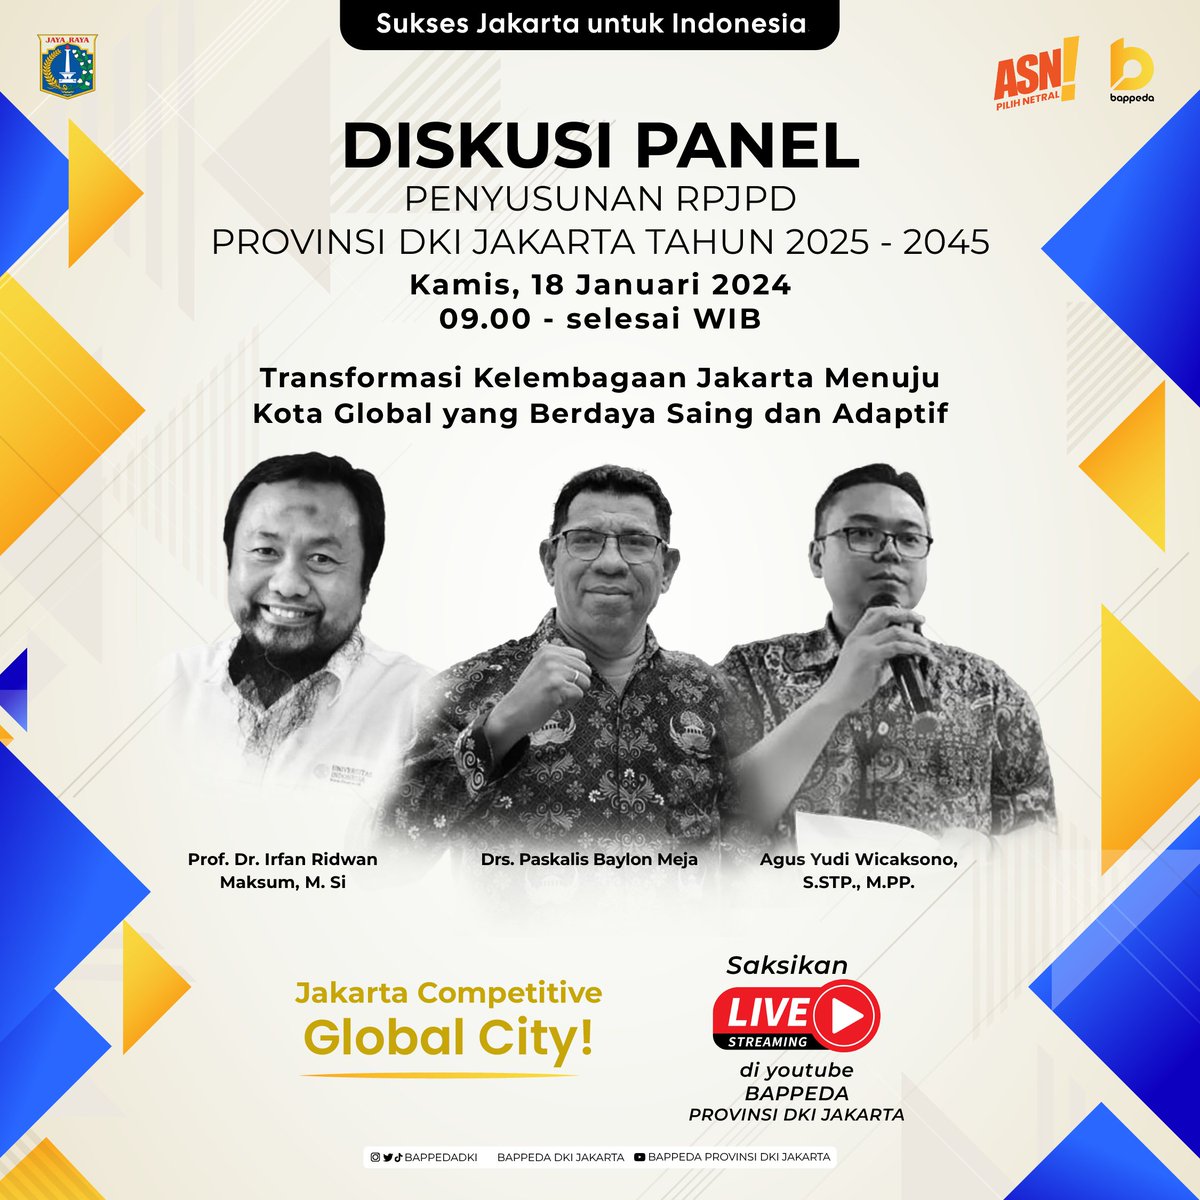 Diskusi Panel Penyusunan RPJPD DKI Jakarta hari ke 2 membahas Transformasi Kelembagaan Jakarta Menuju Kota Global yang Berdaya Saing dan Adaptif, serta Refleksi Strategi dan Arah Kebijakan Pembangunan Manusia Untuk Menjadikan Jakarta Sebagai Kota Global yang Humanis dan Berbudaya